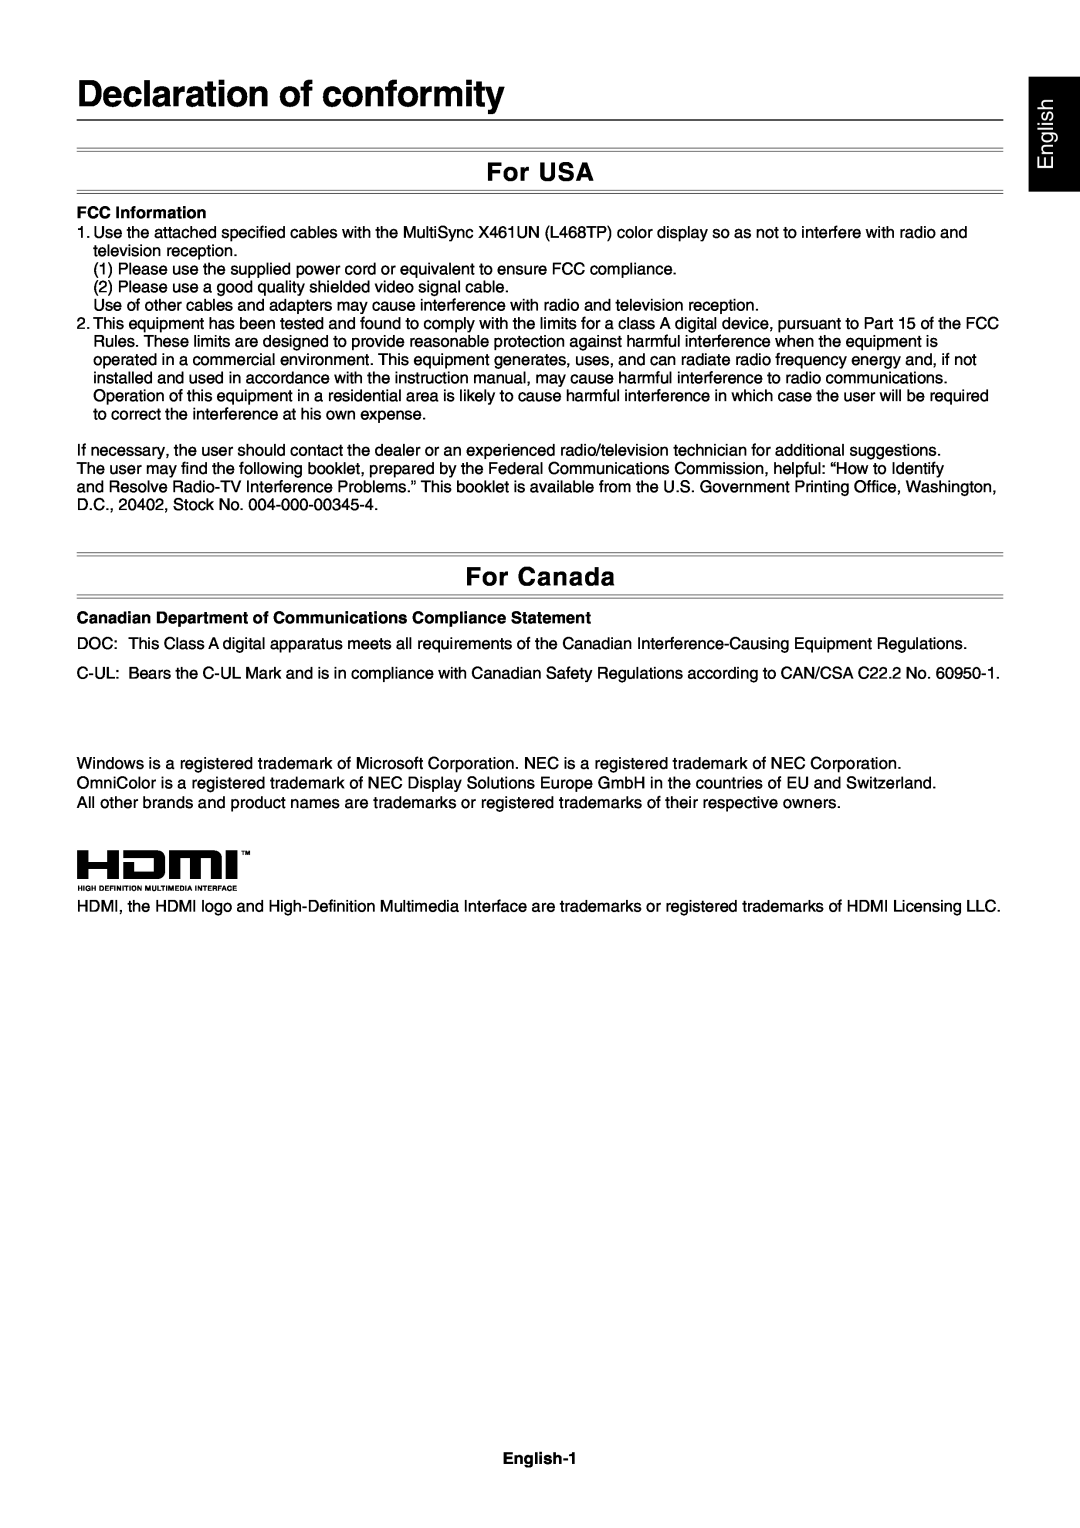 NEC X461UN user manual Declaration of conformity, For USA, For Canada, English 